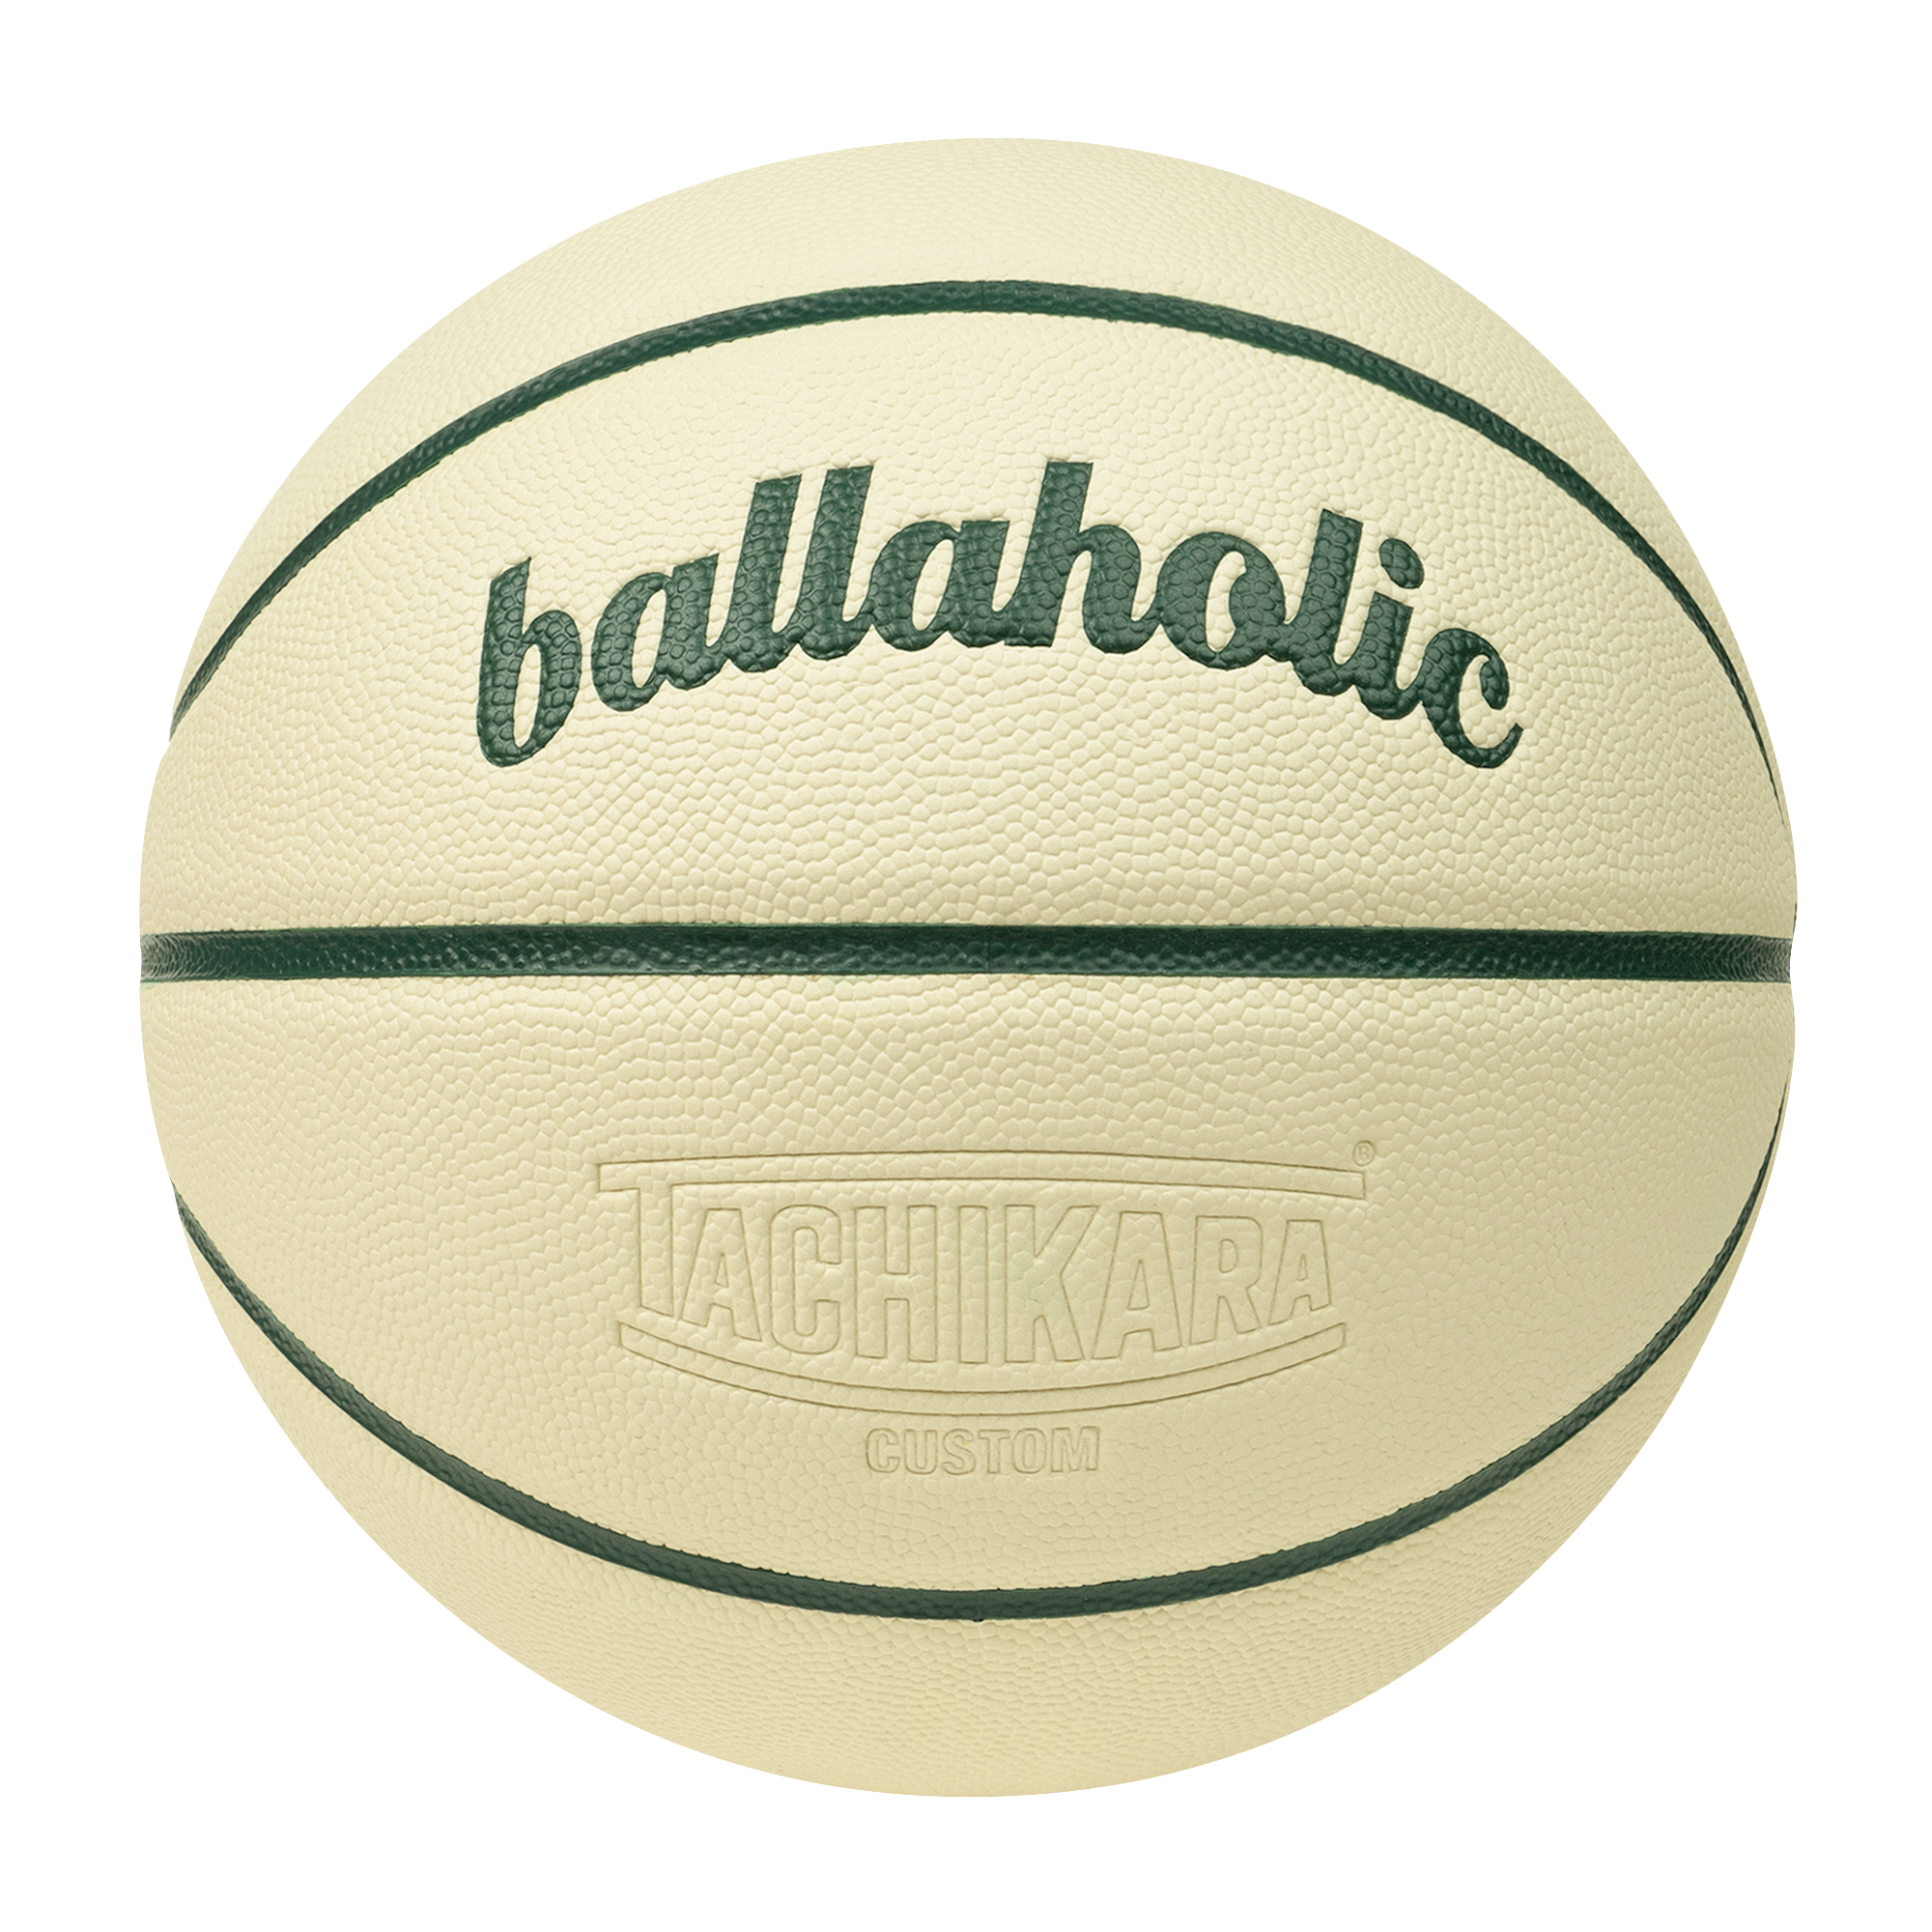 ⚫️Playground Basketball ballaholic 5号